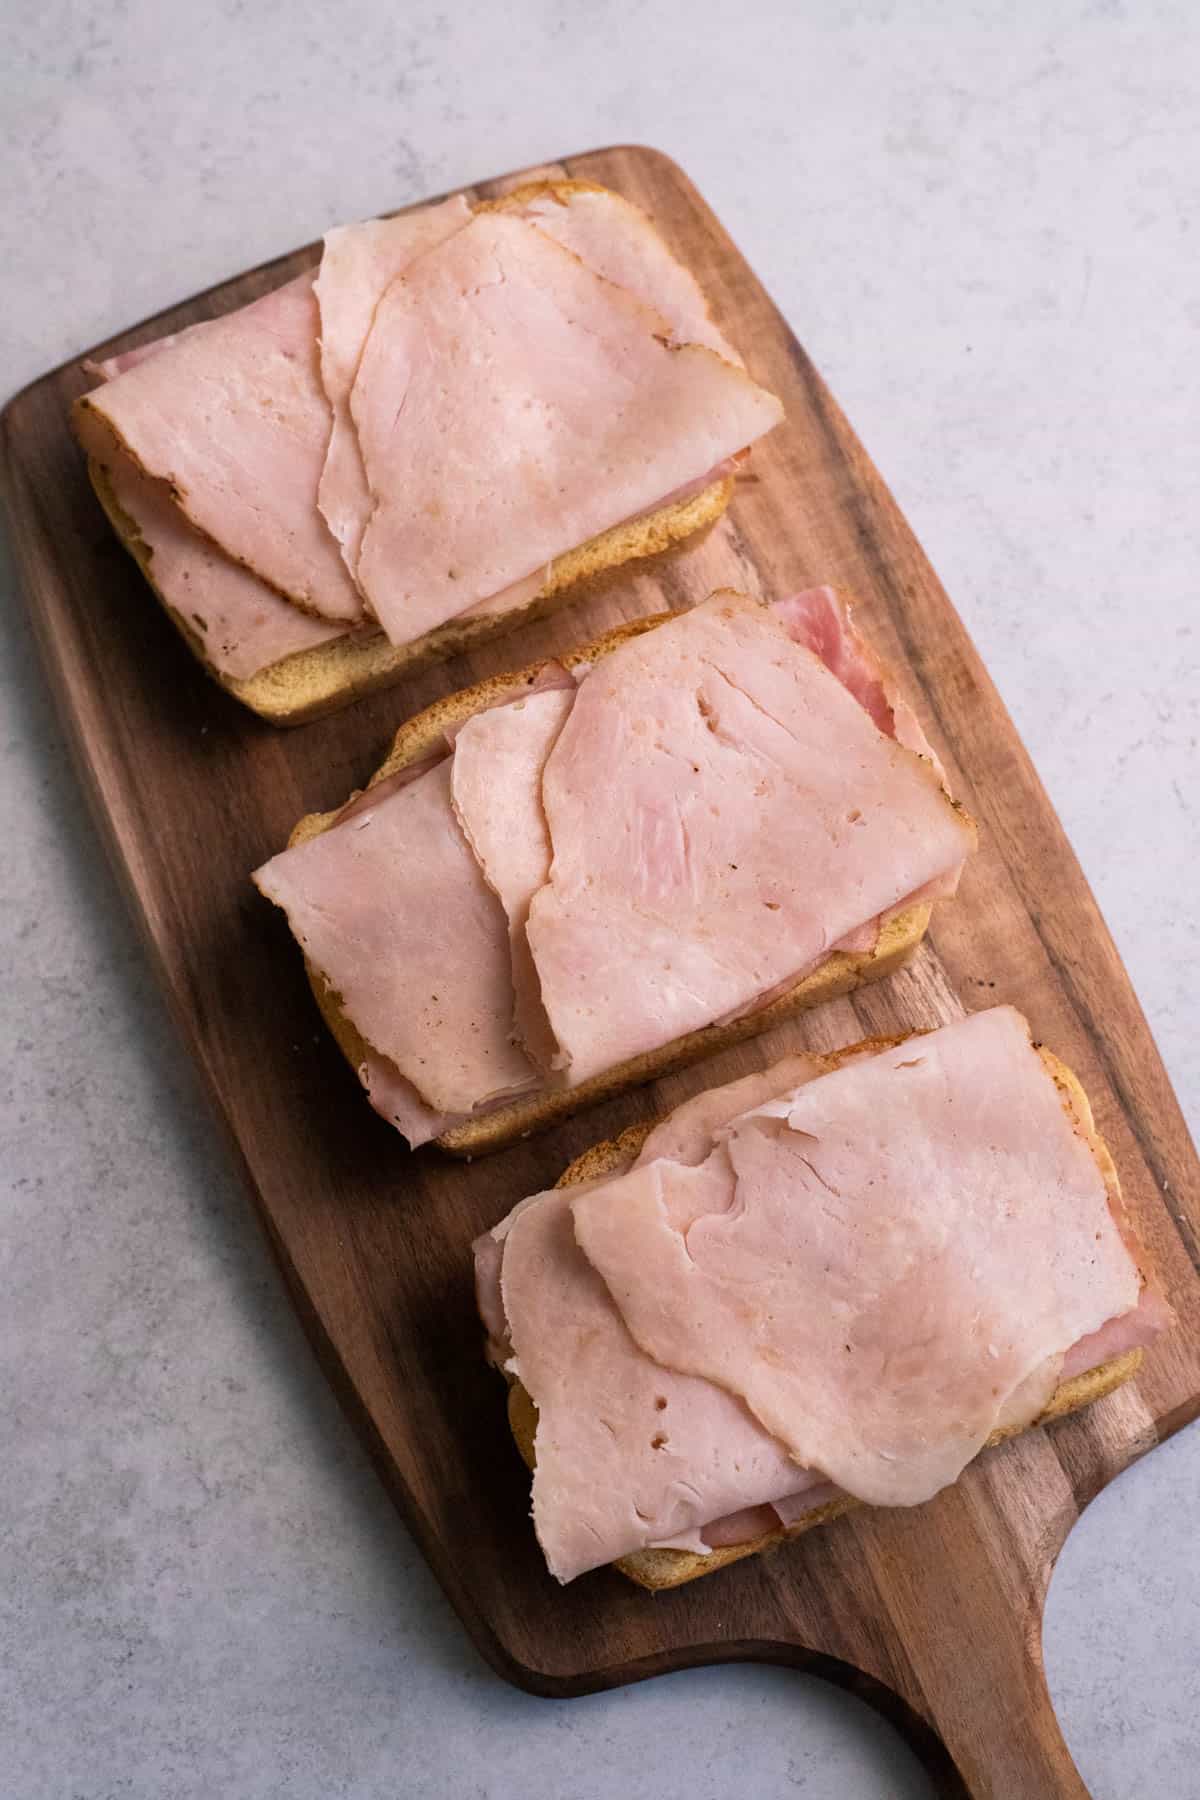 Monte Cristo Sandwiches with turkey on top.